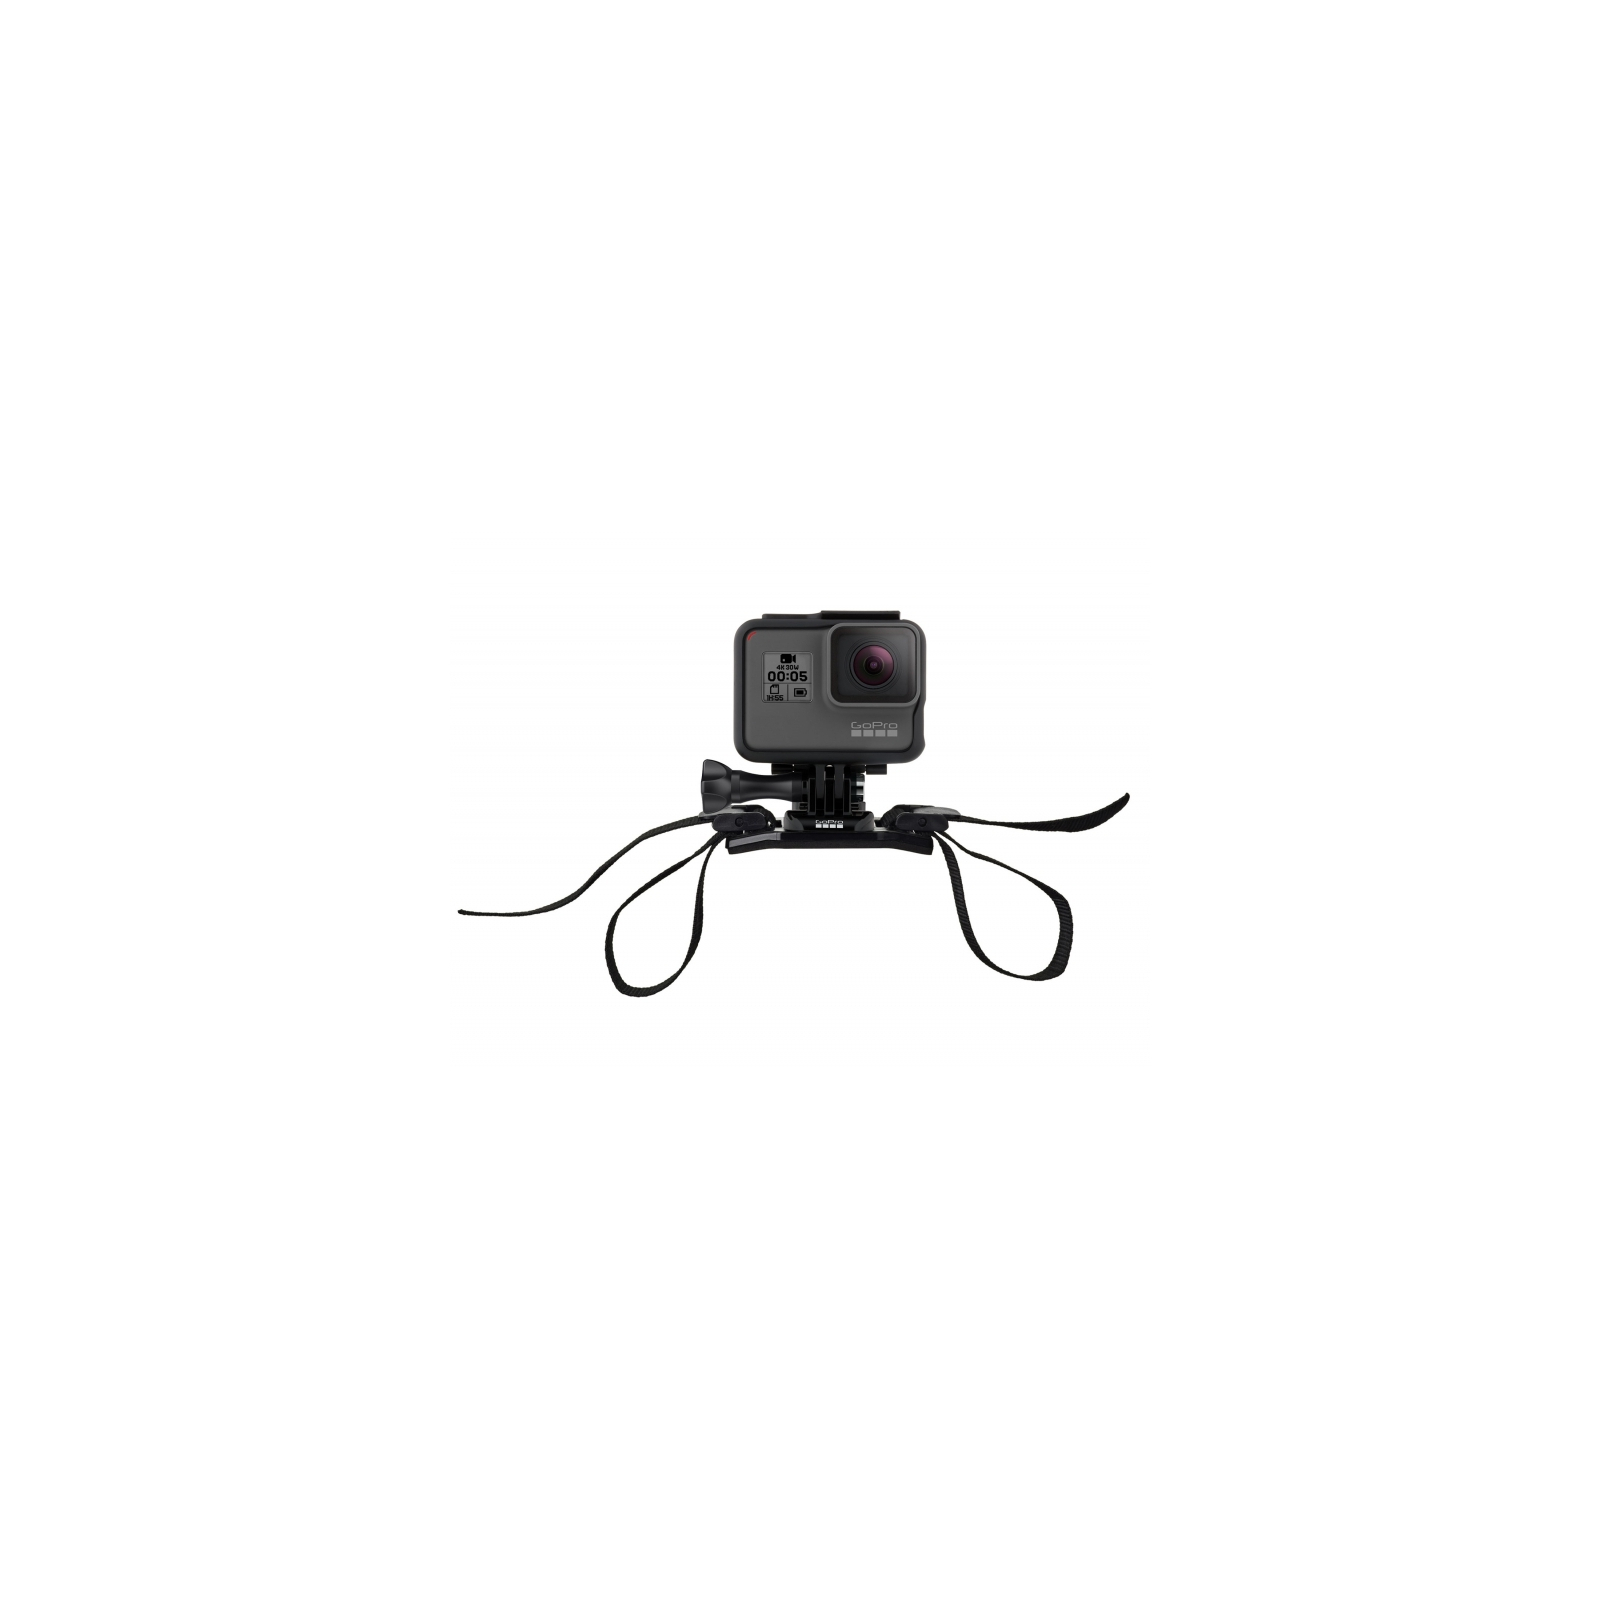 Аксессуар к экшн-камерам GoPro Vented Helmet Strap Mount (GVHS30) изображение 2